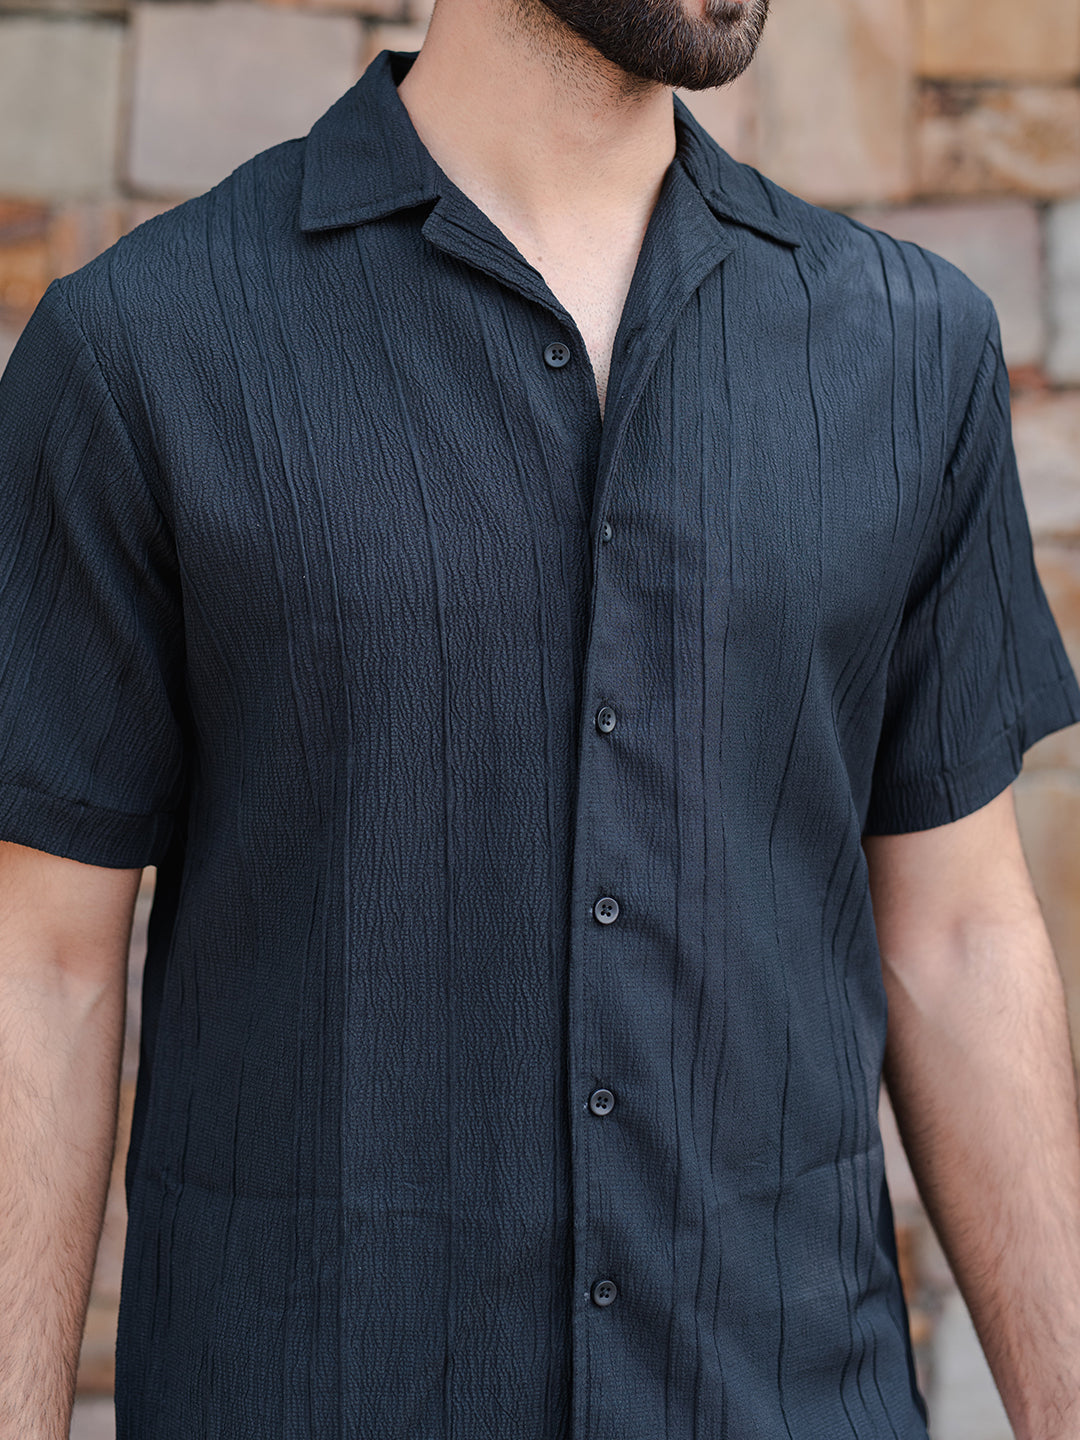 Buy Black Oversized Striped Popcorn Texture Half Sleeves Shirt Online